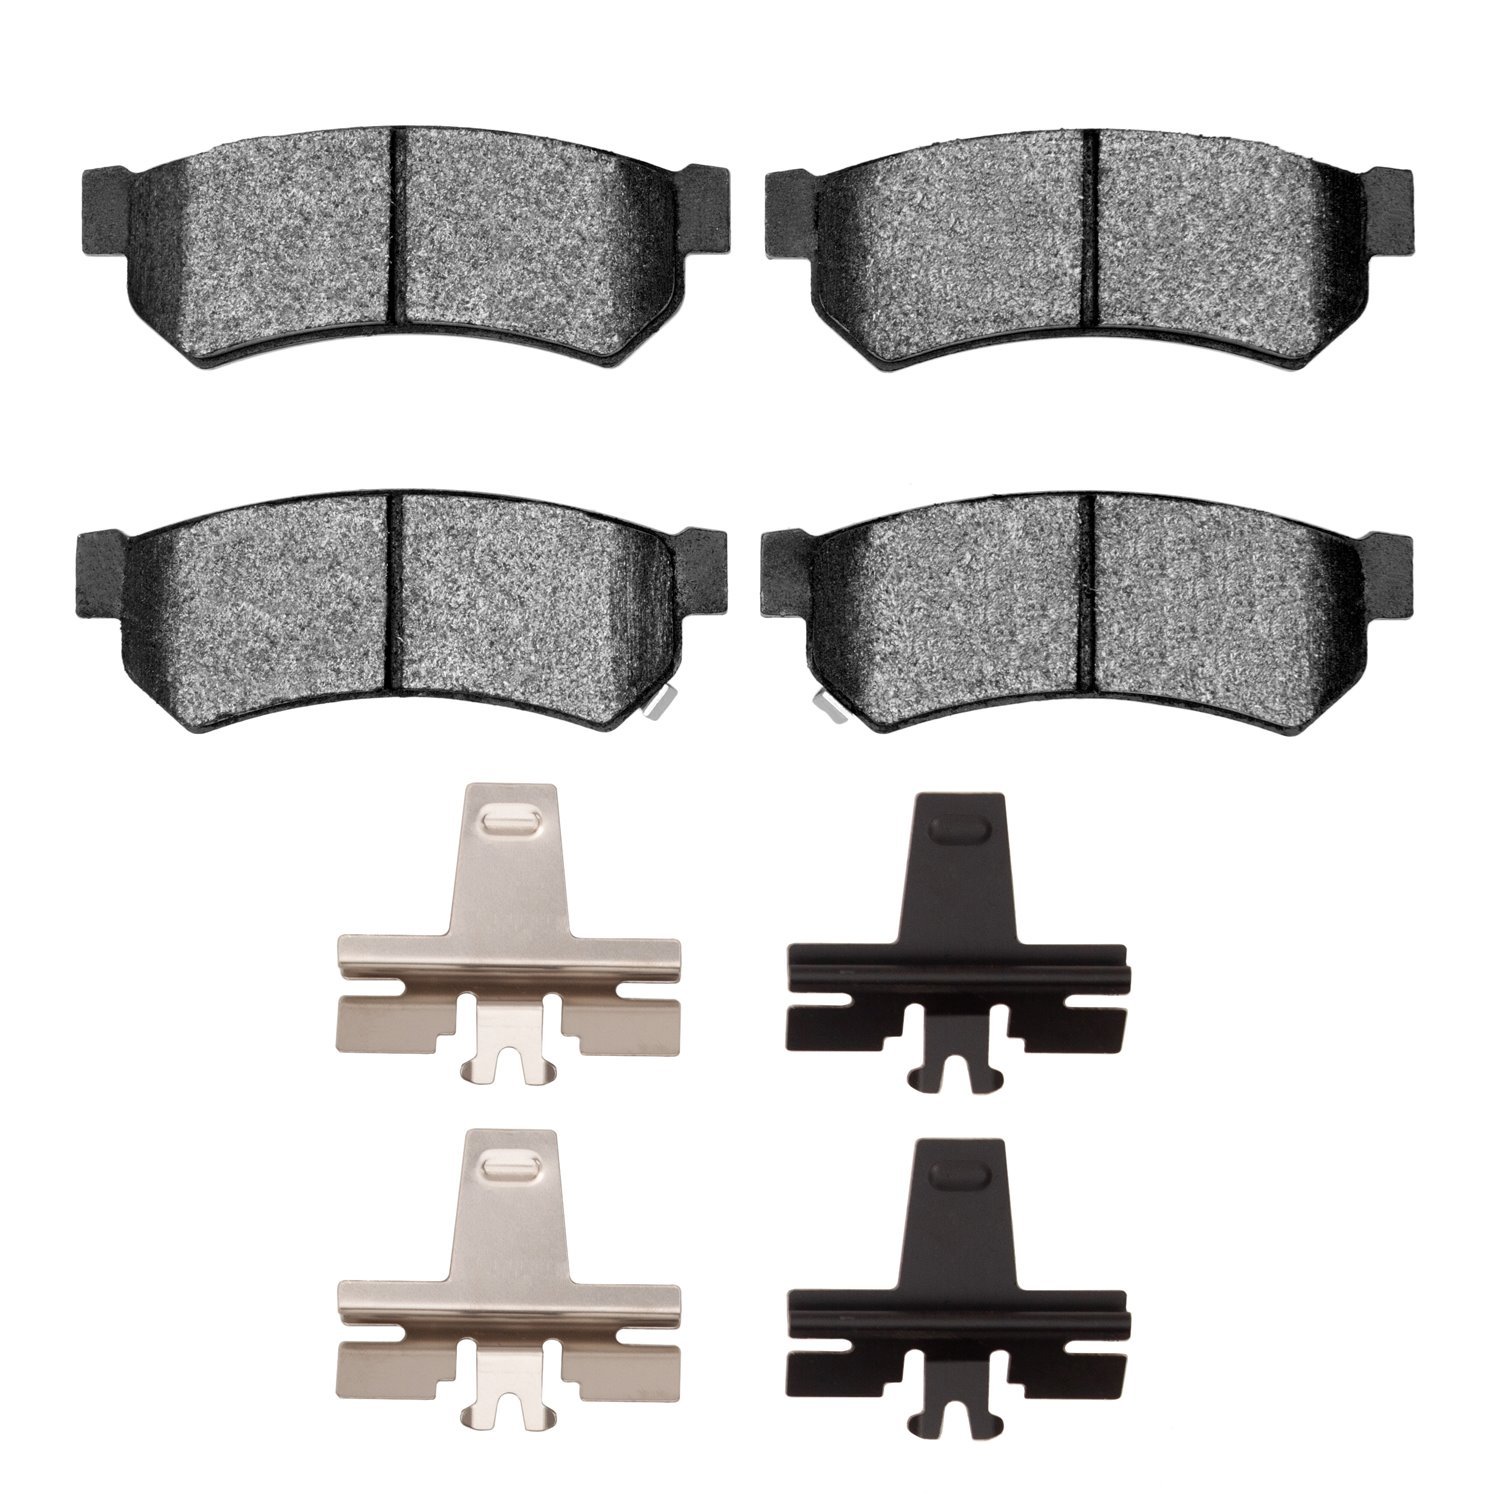 1310-1739-01 3000-Series Ceramic Brake Pads & Hardware Kit, 2007-2016 Multiple Makes/Models, Position: Rear